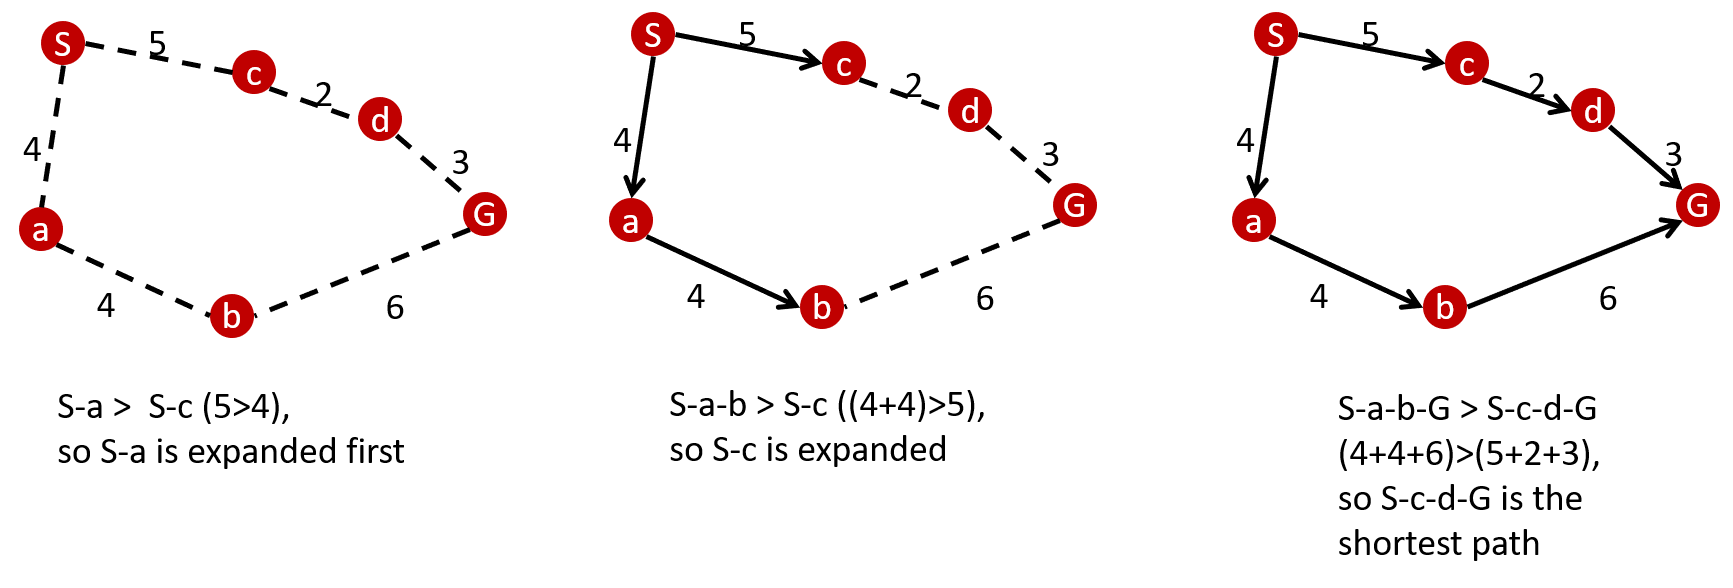 Figure 3: Dijkstra's algorithm for finding the shortest path